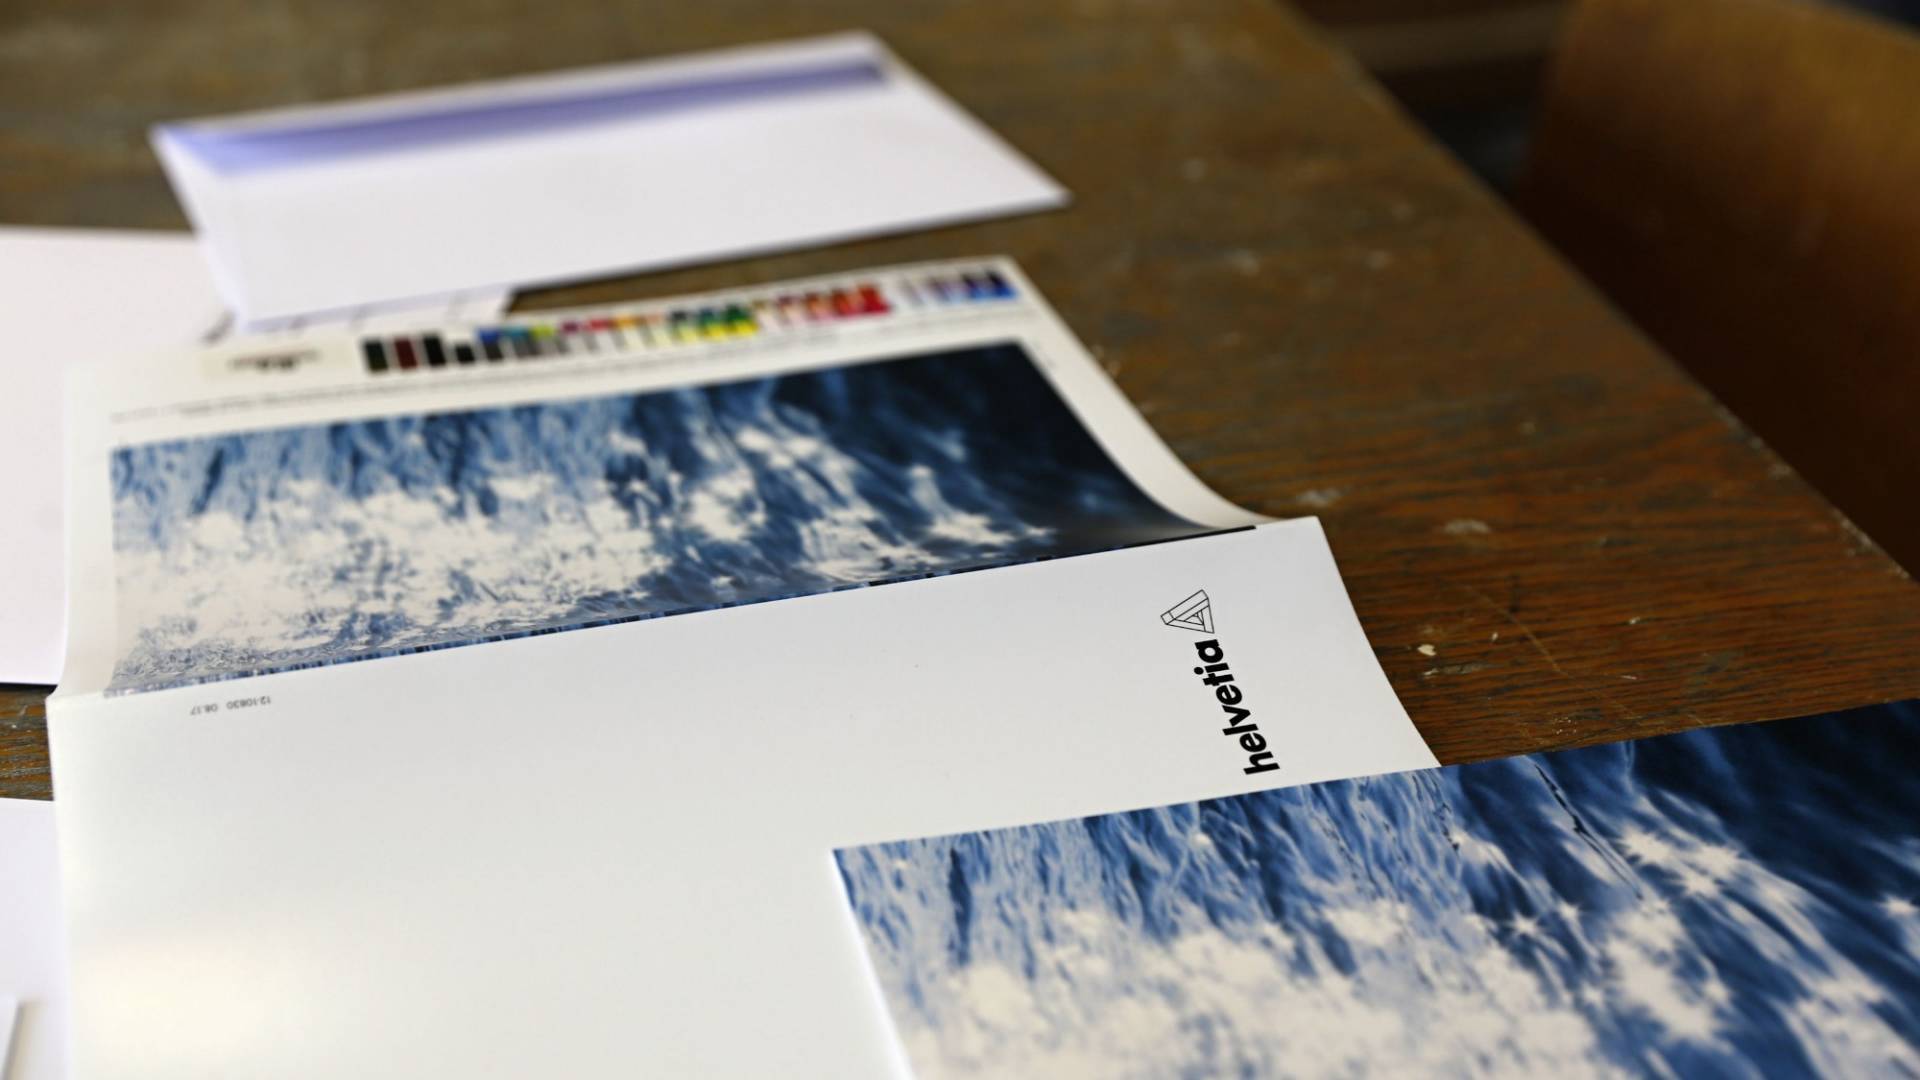 The art postcard for Edition Helvetia 2017 lying on a table.